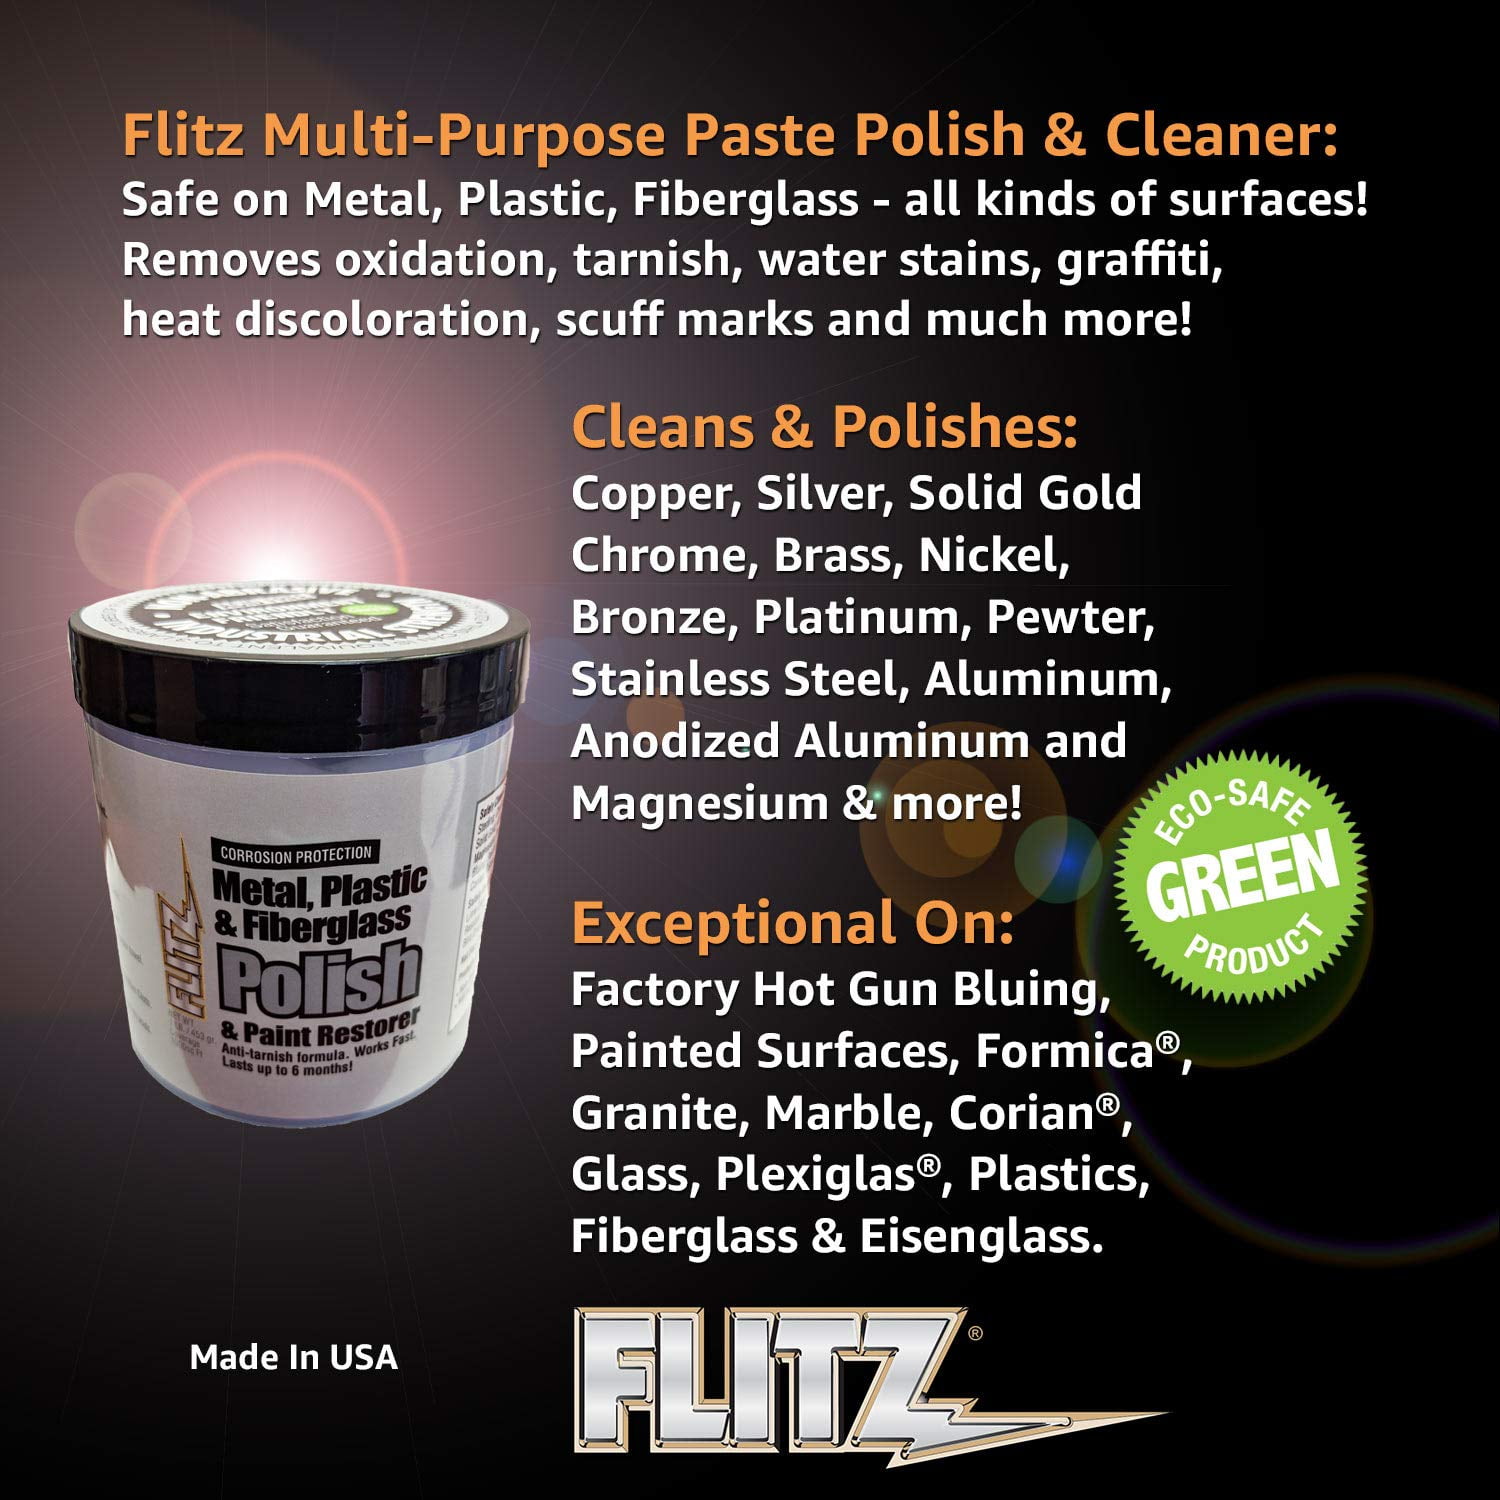 Flitz - Metal, Plastic & Fiberglass Polish Paste - 1.0lb